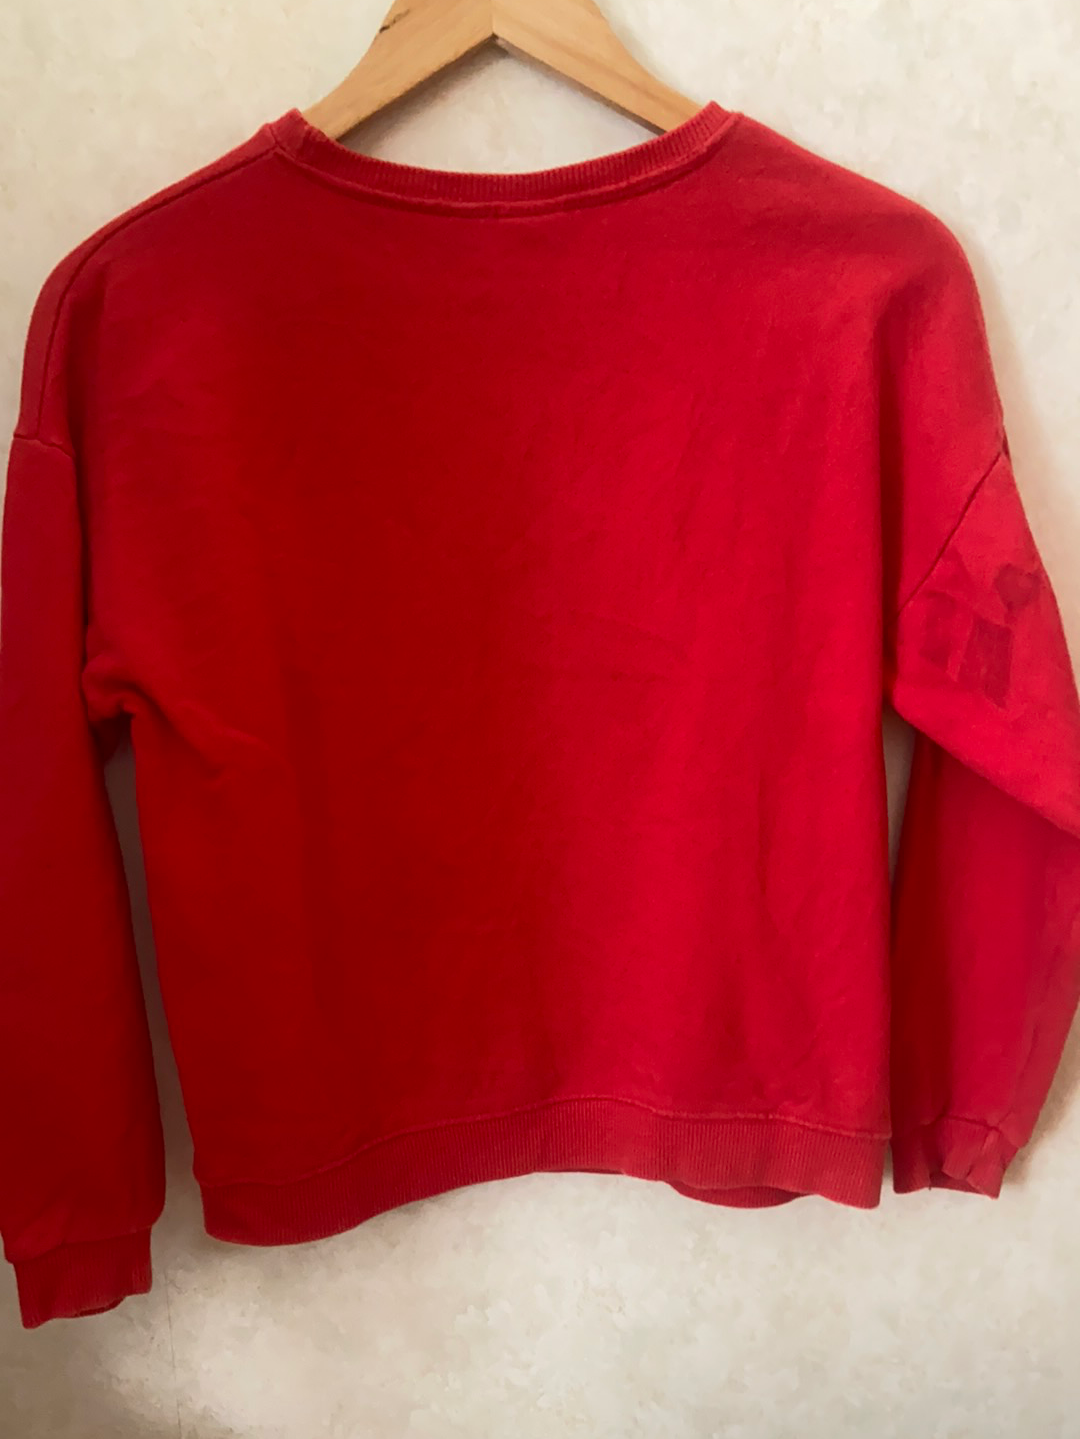 Disney Vintage Sweatshirt - Size 11 /12